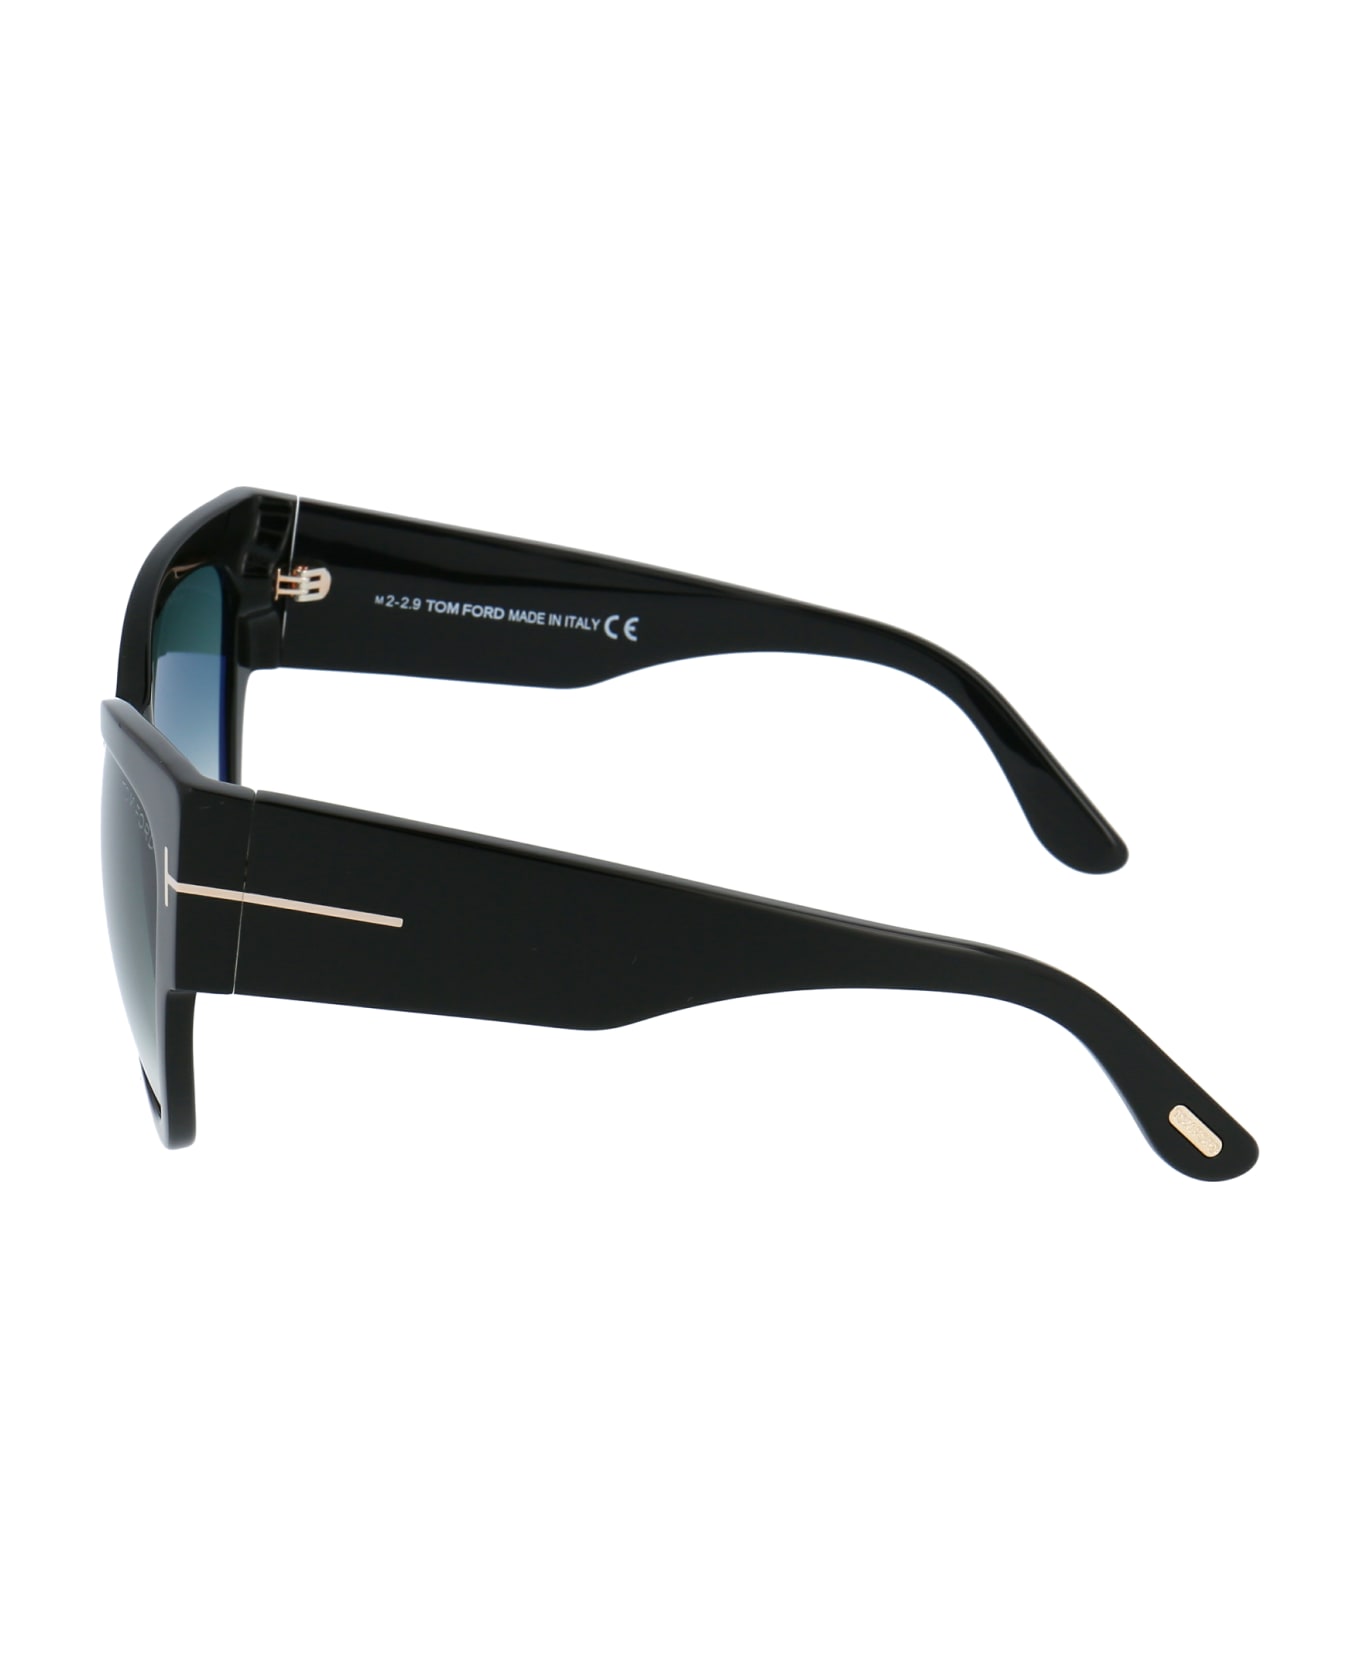 Tom Ford Eyewear Anoushka Sunglasses - 01B Nero Lucido / Fumo Grad